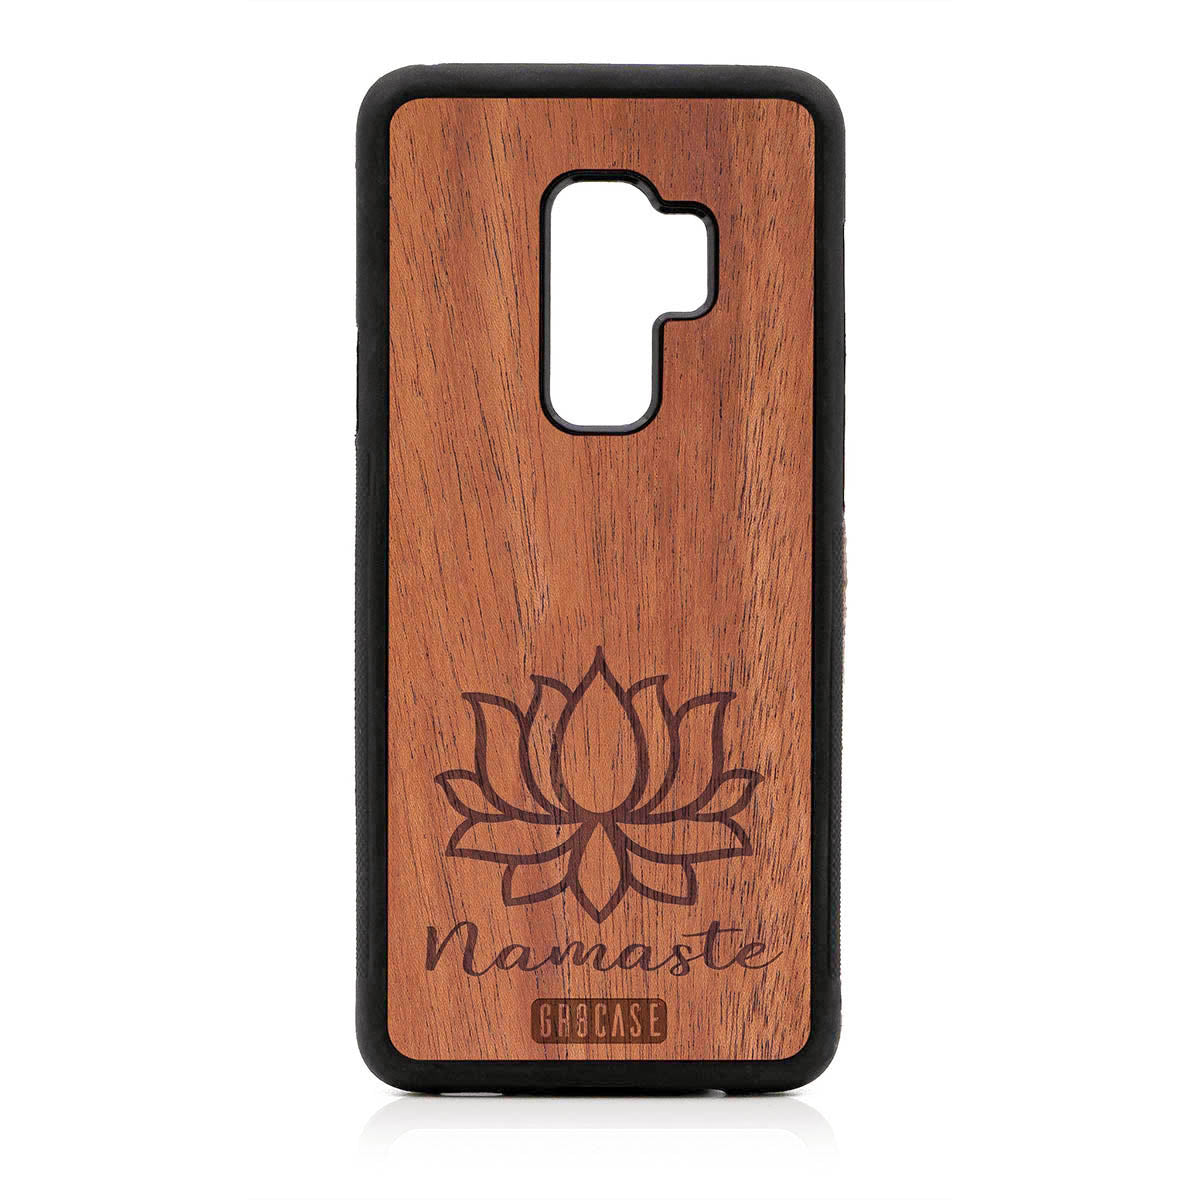 Namaste (Lotus Flower) Design Wood Case For Samsung Galaxy S9 Plus